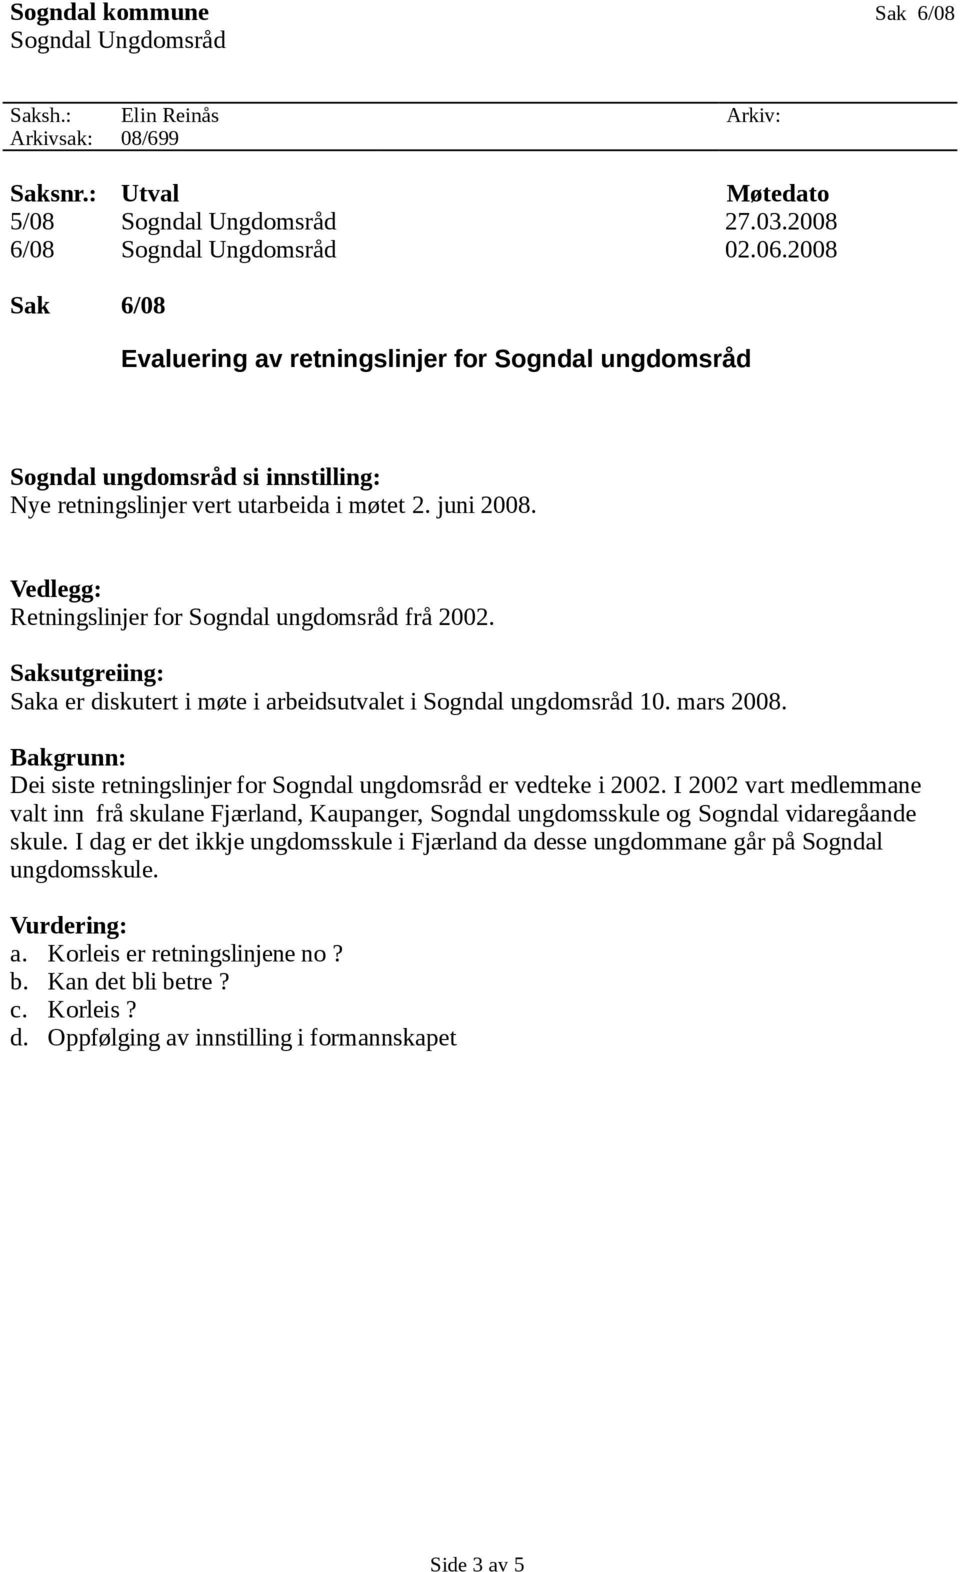 Dei siste retningslinjer for Sogndal ungdomsråd er vedteke i 2002. I 2002 vart medlemmane valt inn frå skulane Fjærland, Kaupanger, Sogndal ungdomsskule og Sogndal vidaregåande skule.